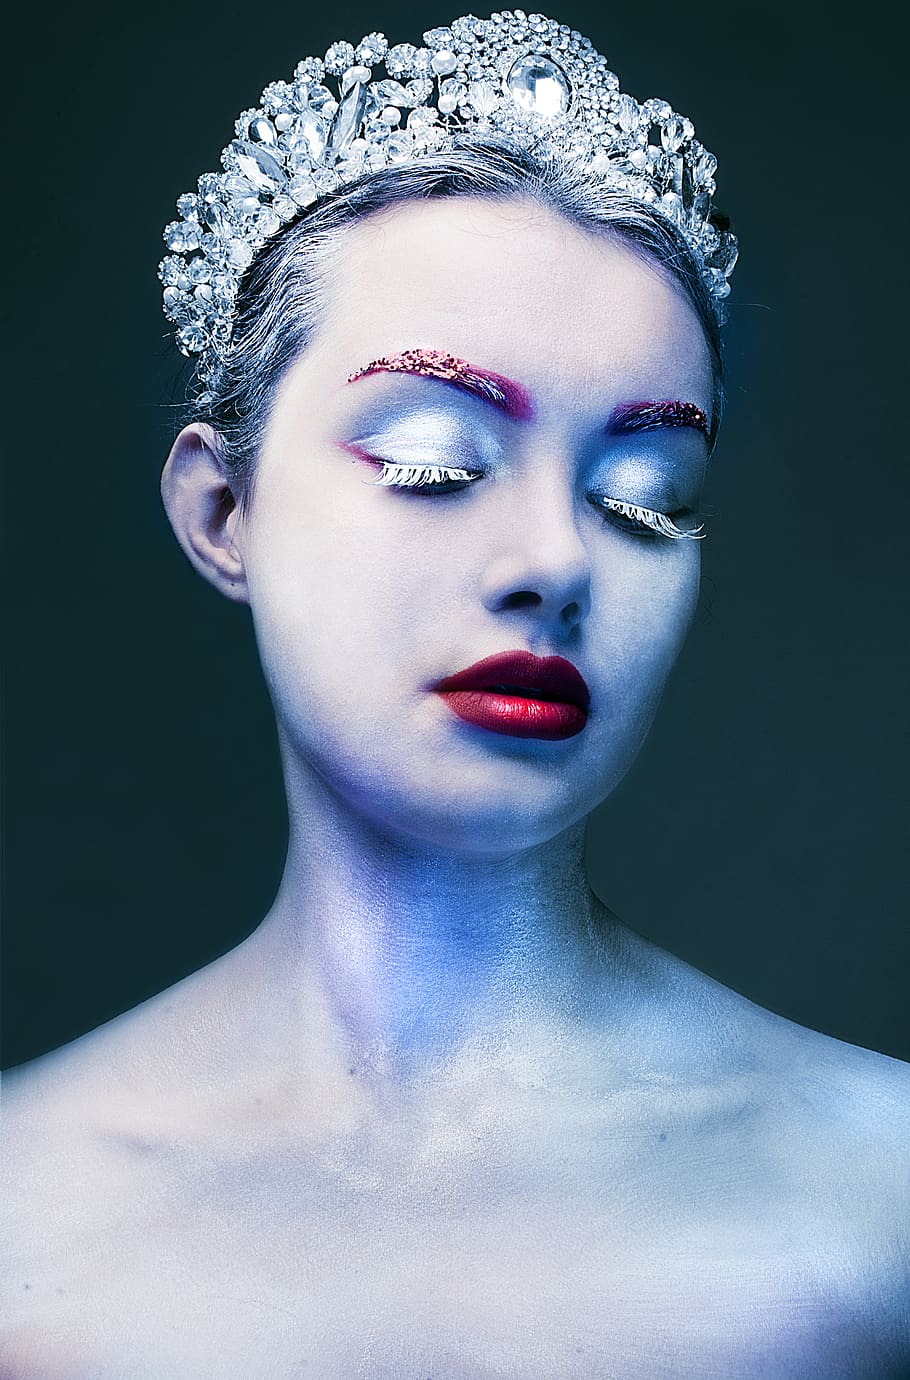 Hd Wallpaper Portrait Of Woman Wearing Jeweled Tiara Pinkish Eyeshadow White Mascara And Red